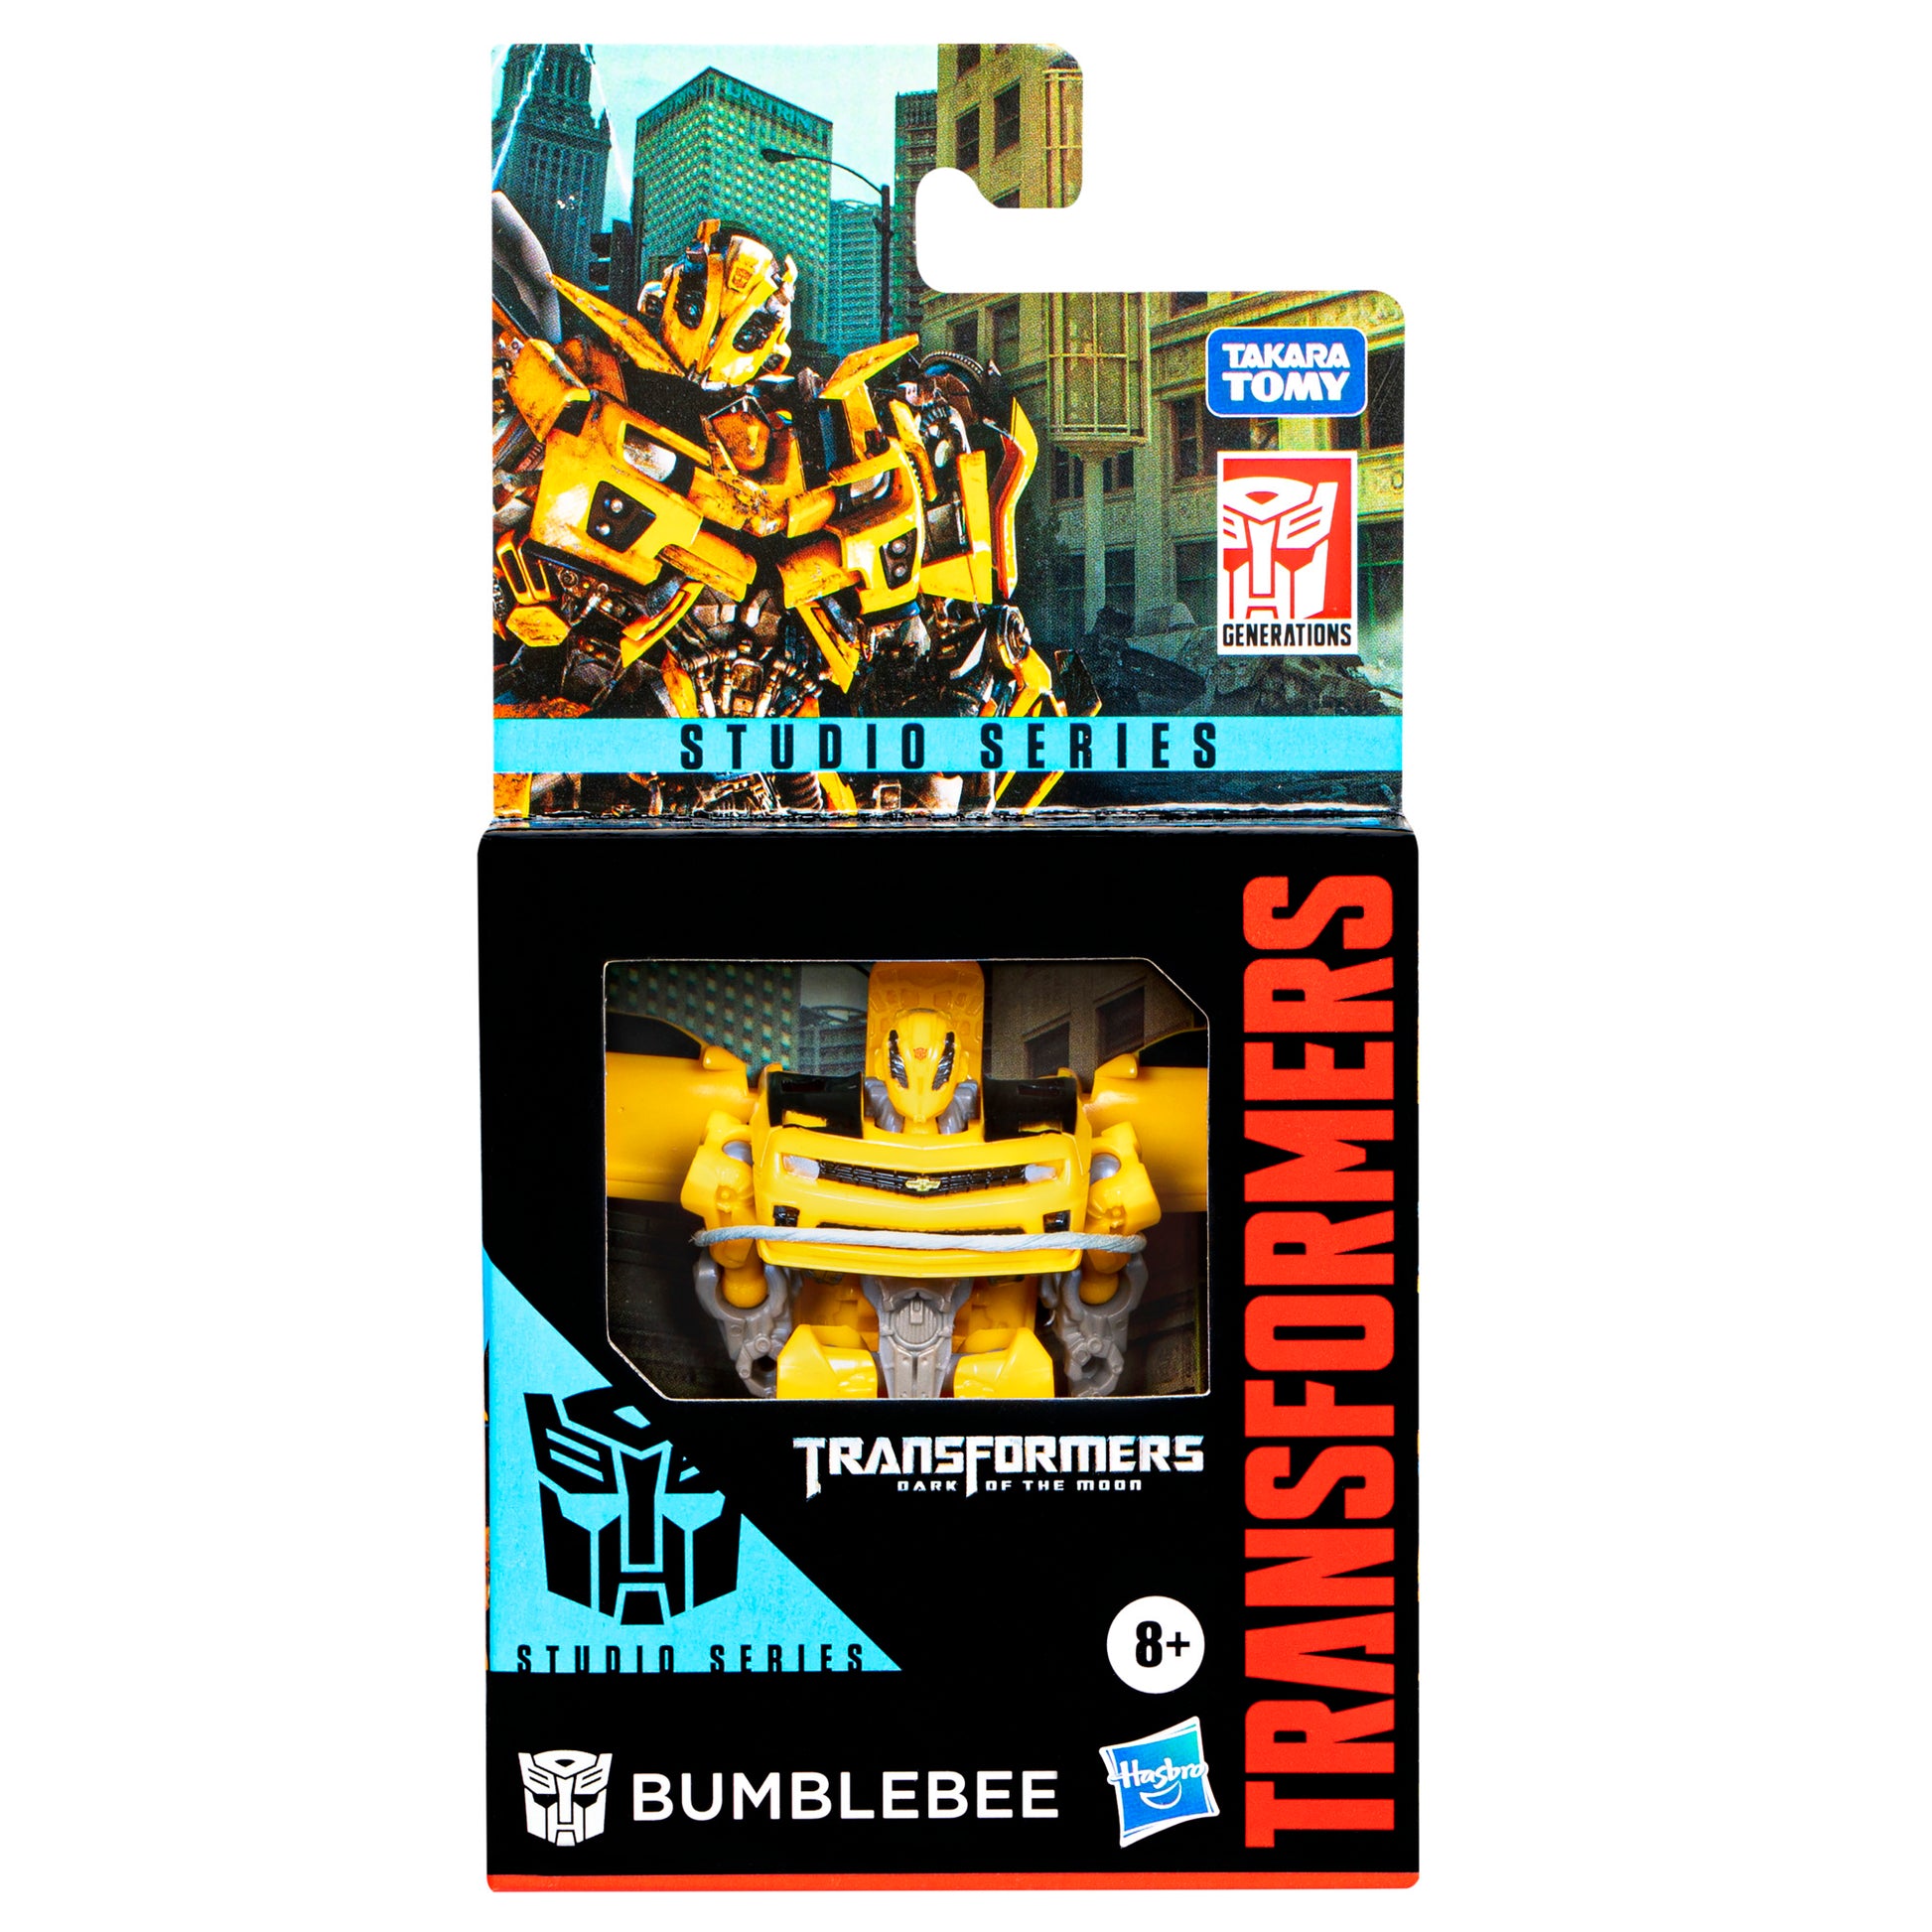 Transformers Studio Series Core Class Bumblebee Action Figure Toy - Heretoserveyou